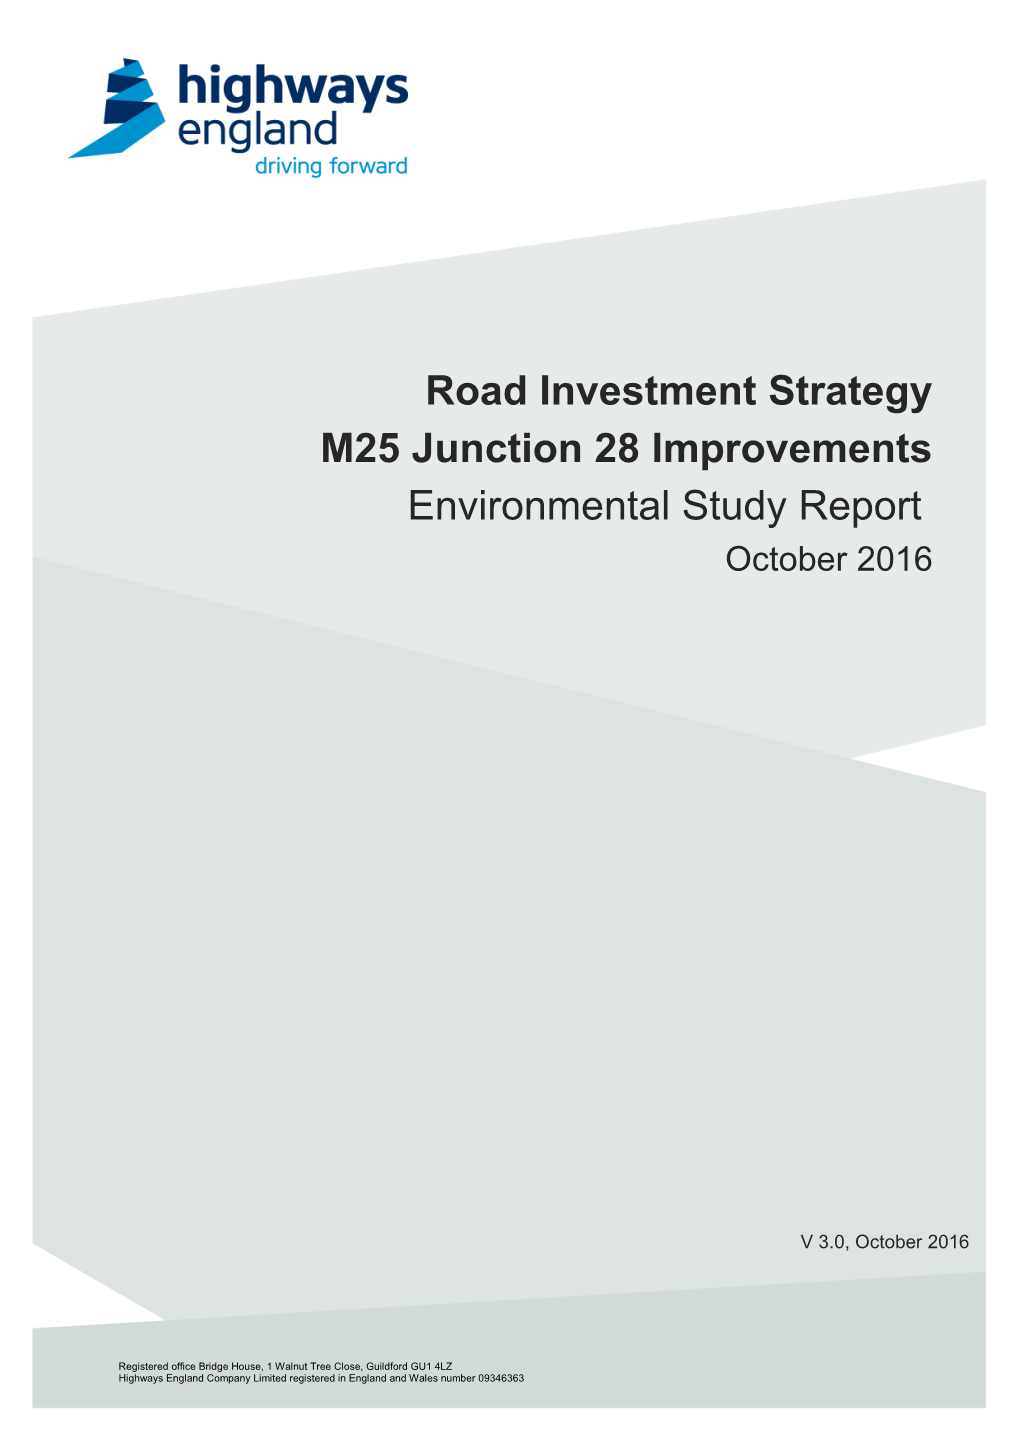 M25 Junction 28 Improvements Environmental Study Report